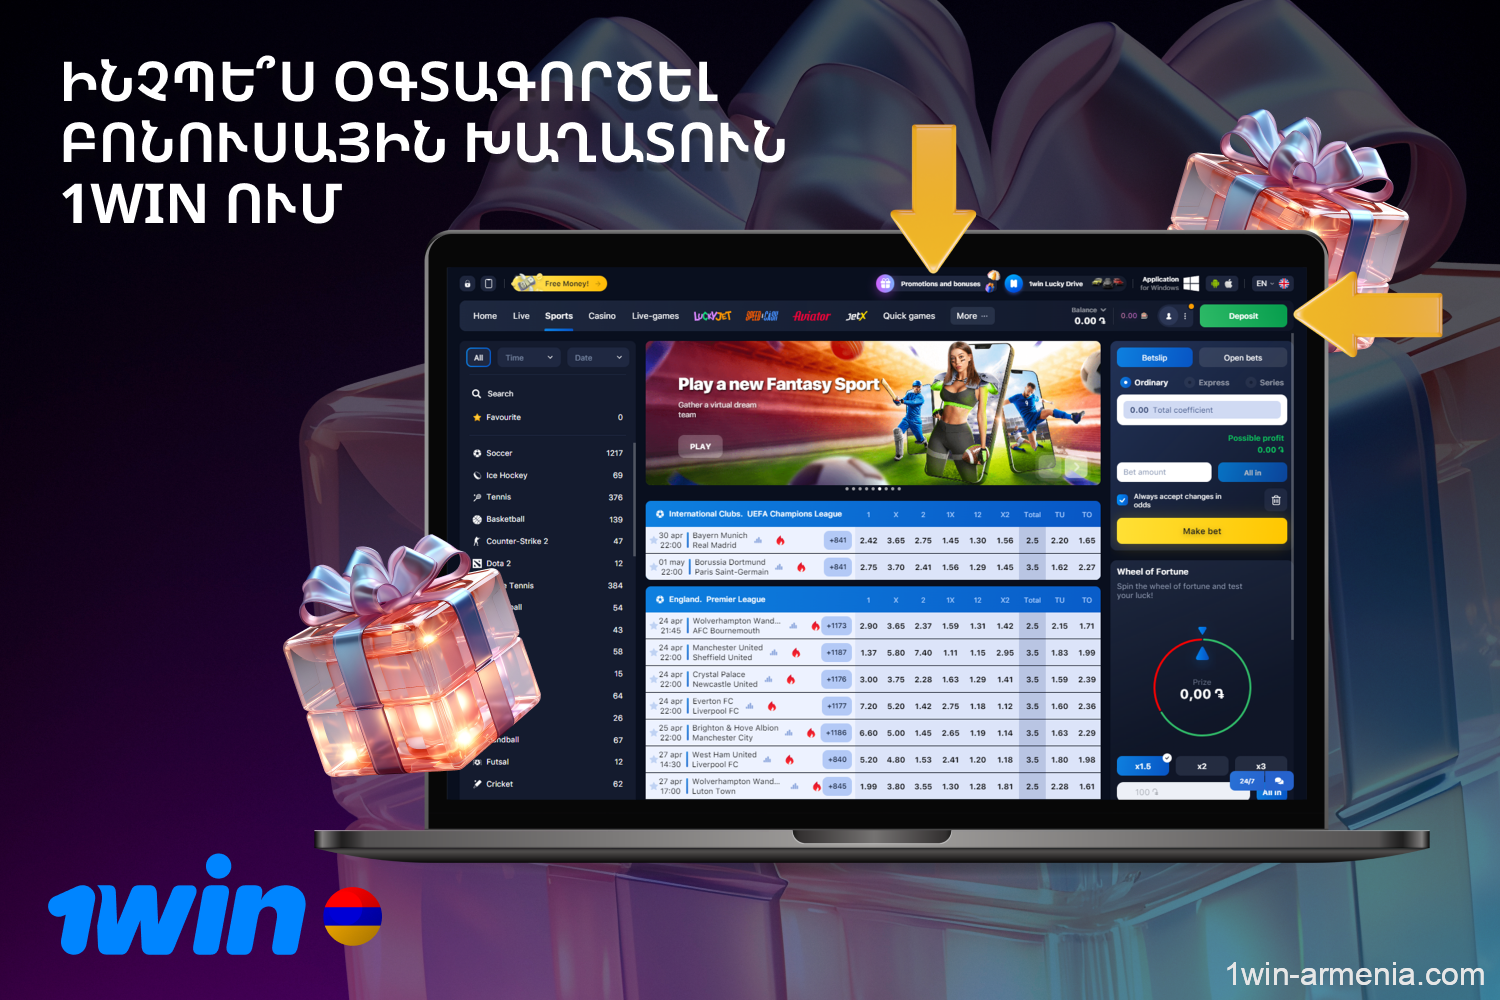 To take advantage of 1win casino bonuses, Armenian players need to take several steps